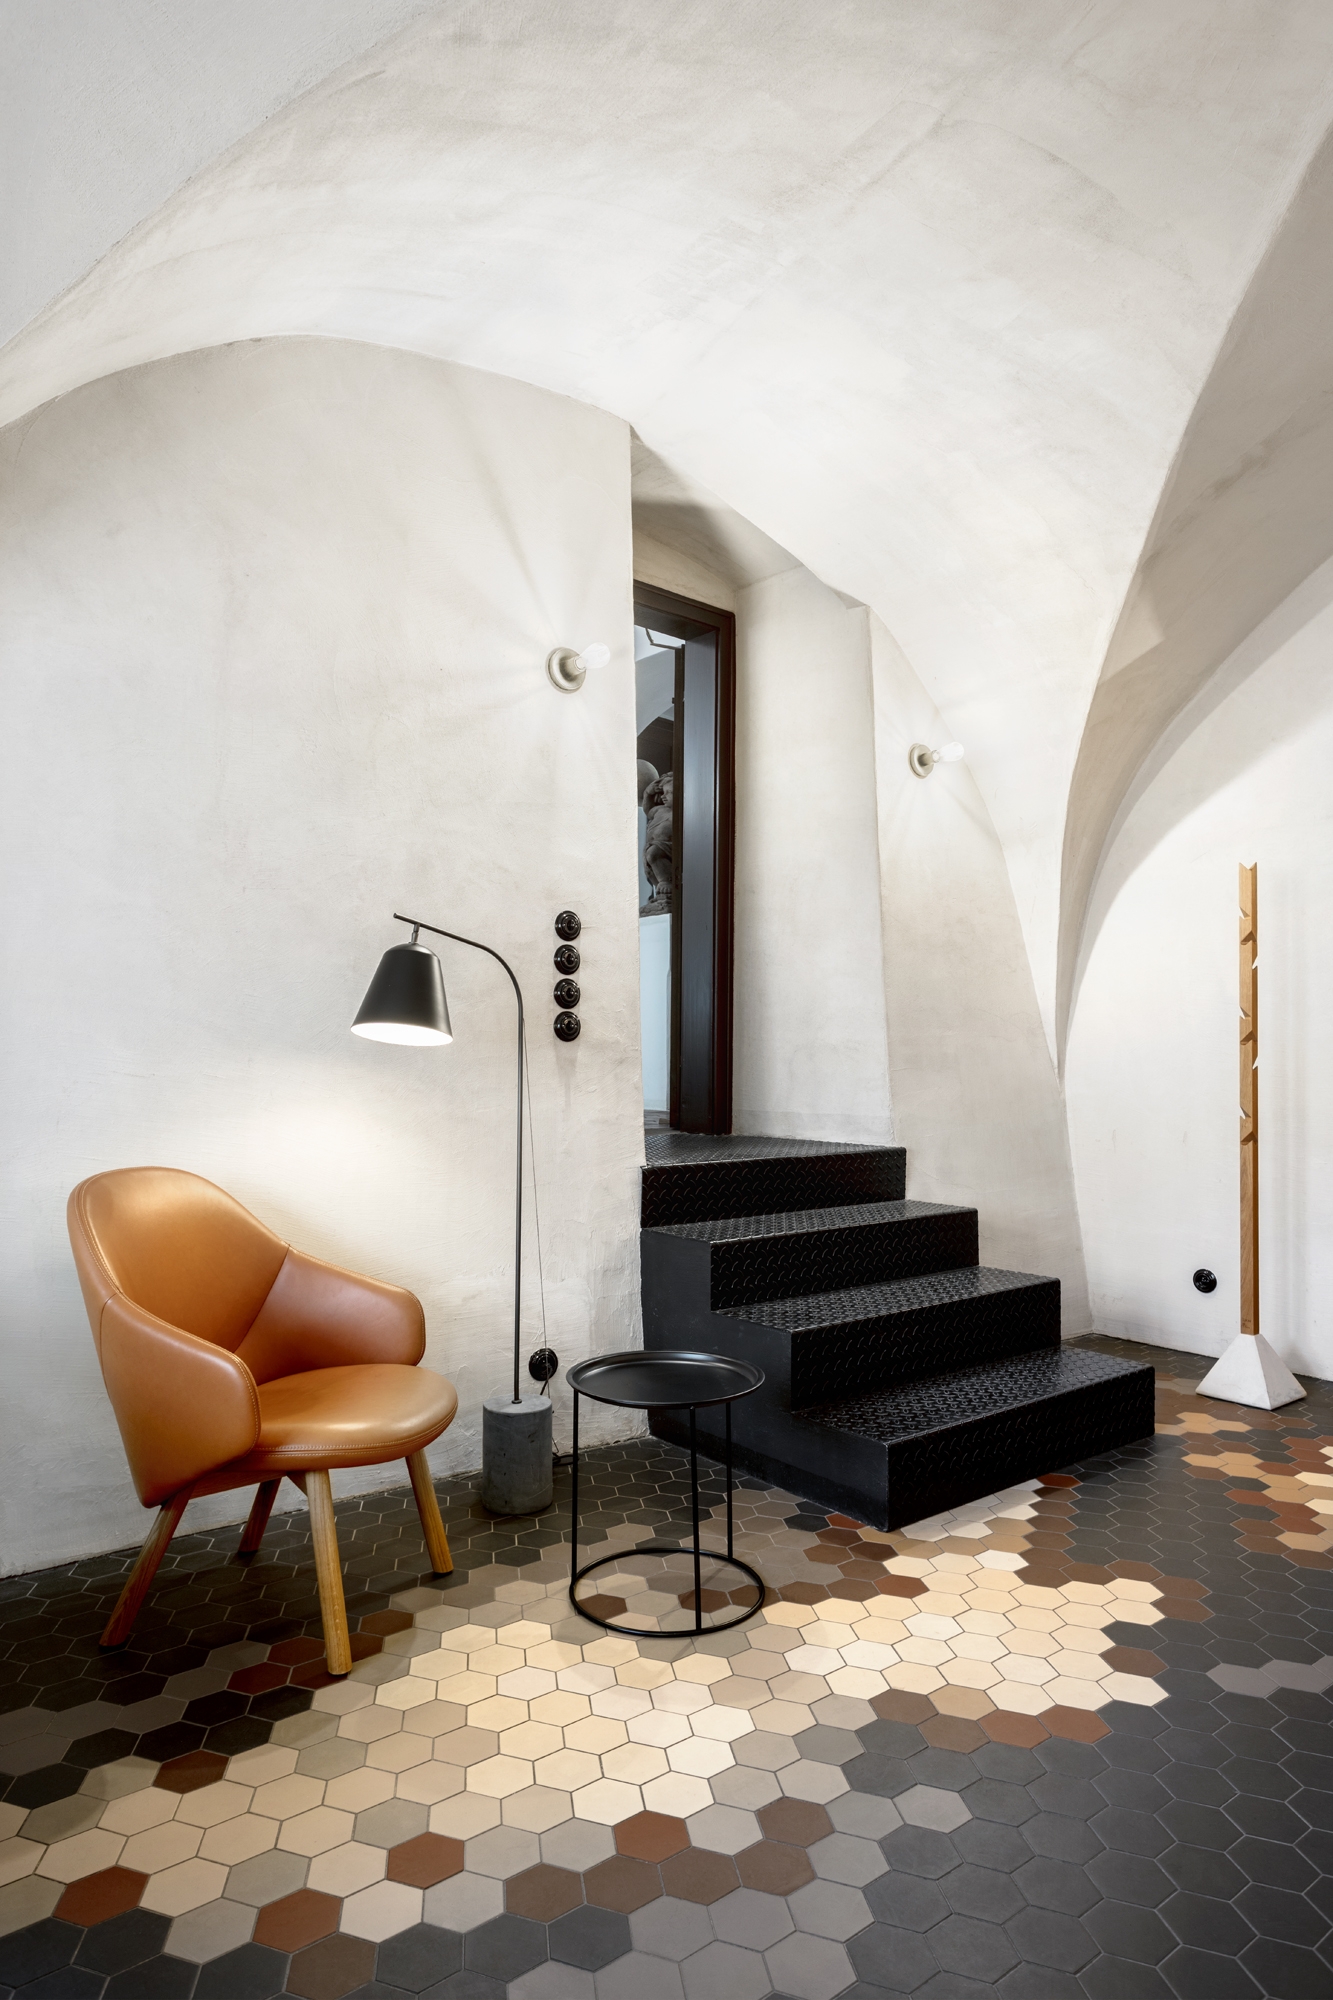 Schody家庭酒吧|ART-Arrakis | 建筑室内设计的创新与灵感